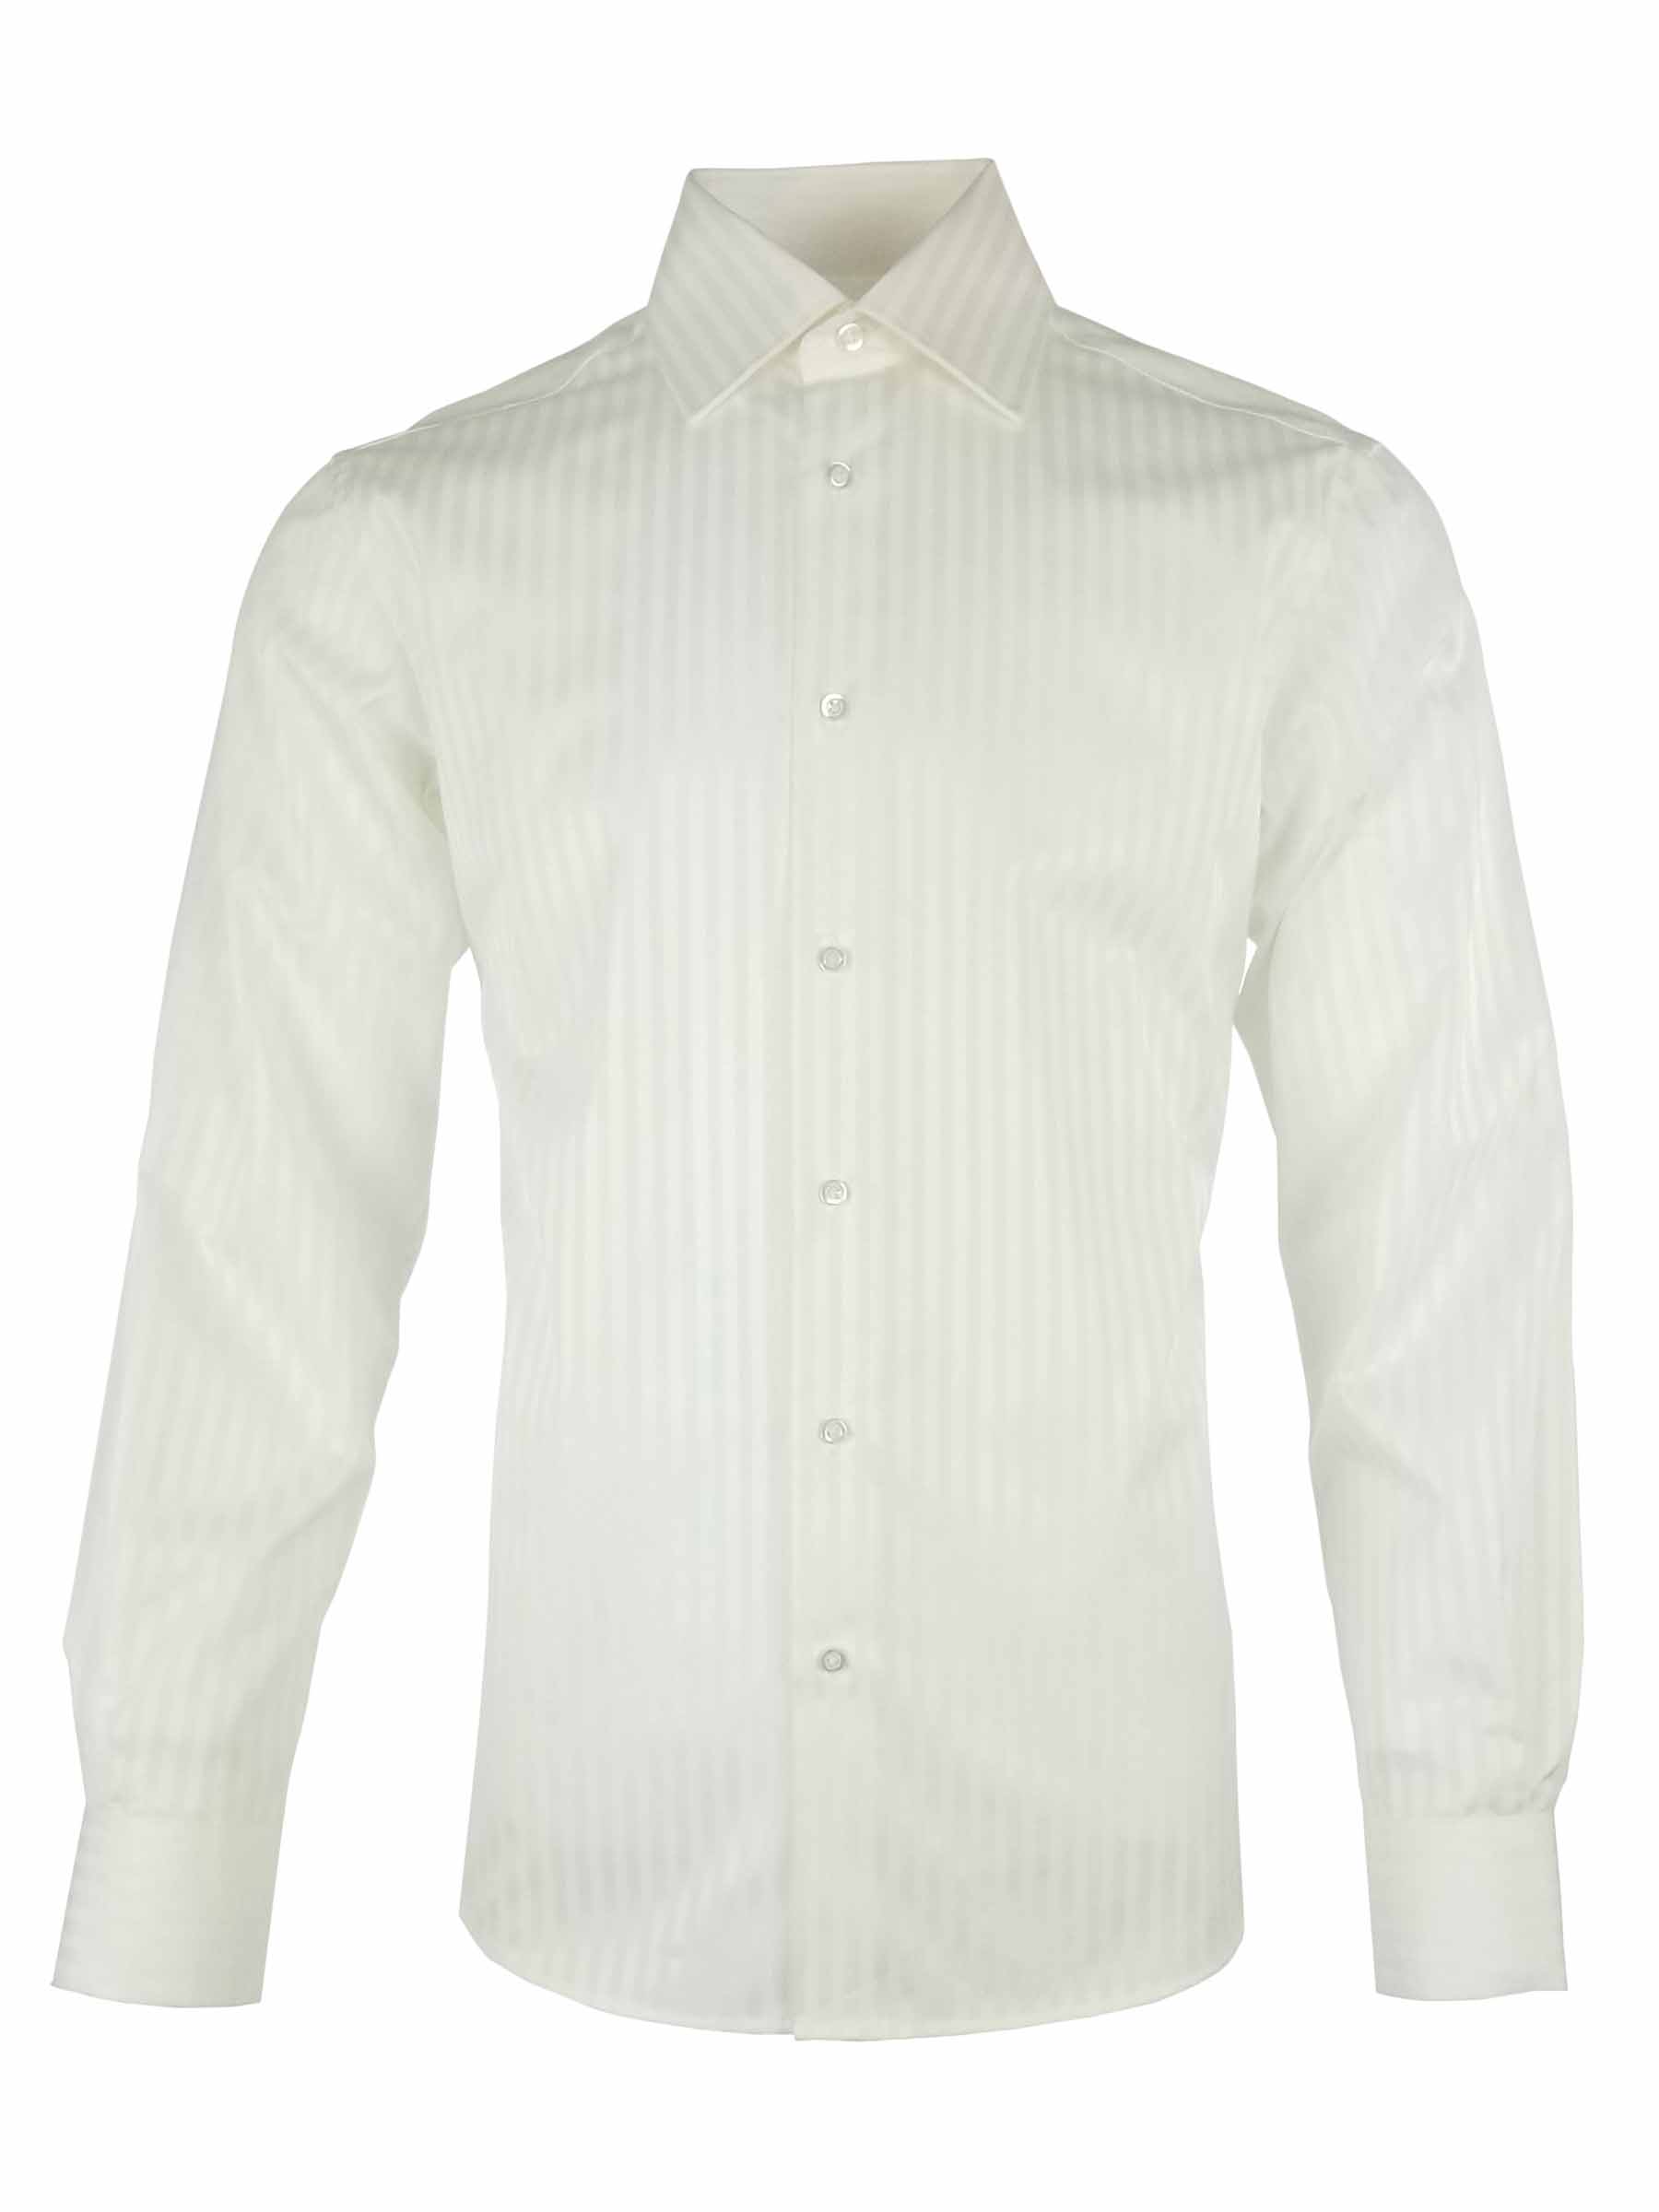 Men's Elegant Shirt - White Sateen Self Stripe Long Sleeve - Uniform Edit